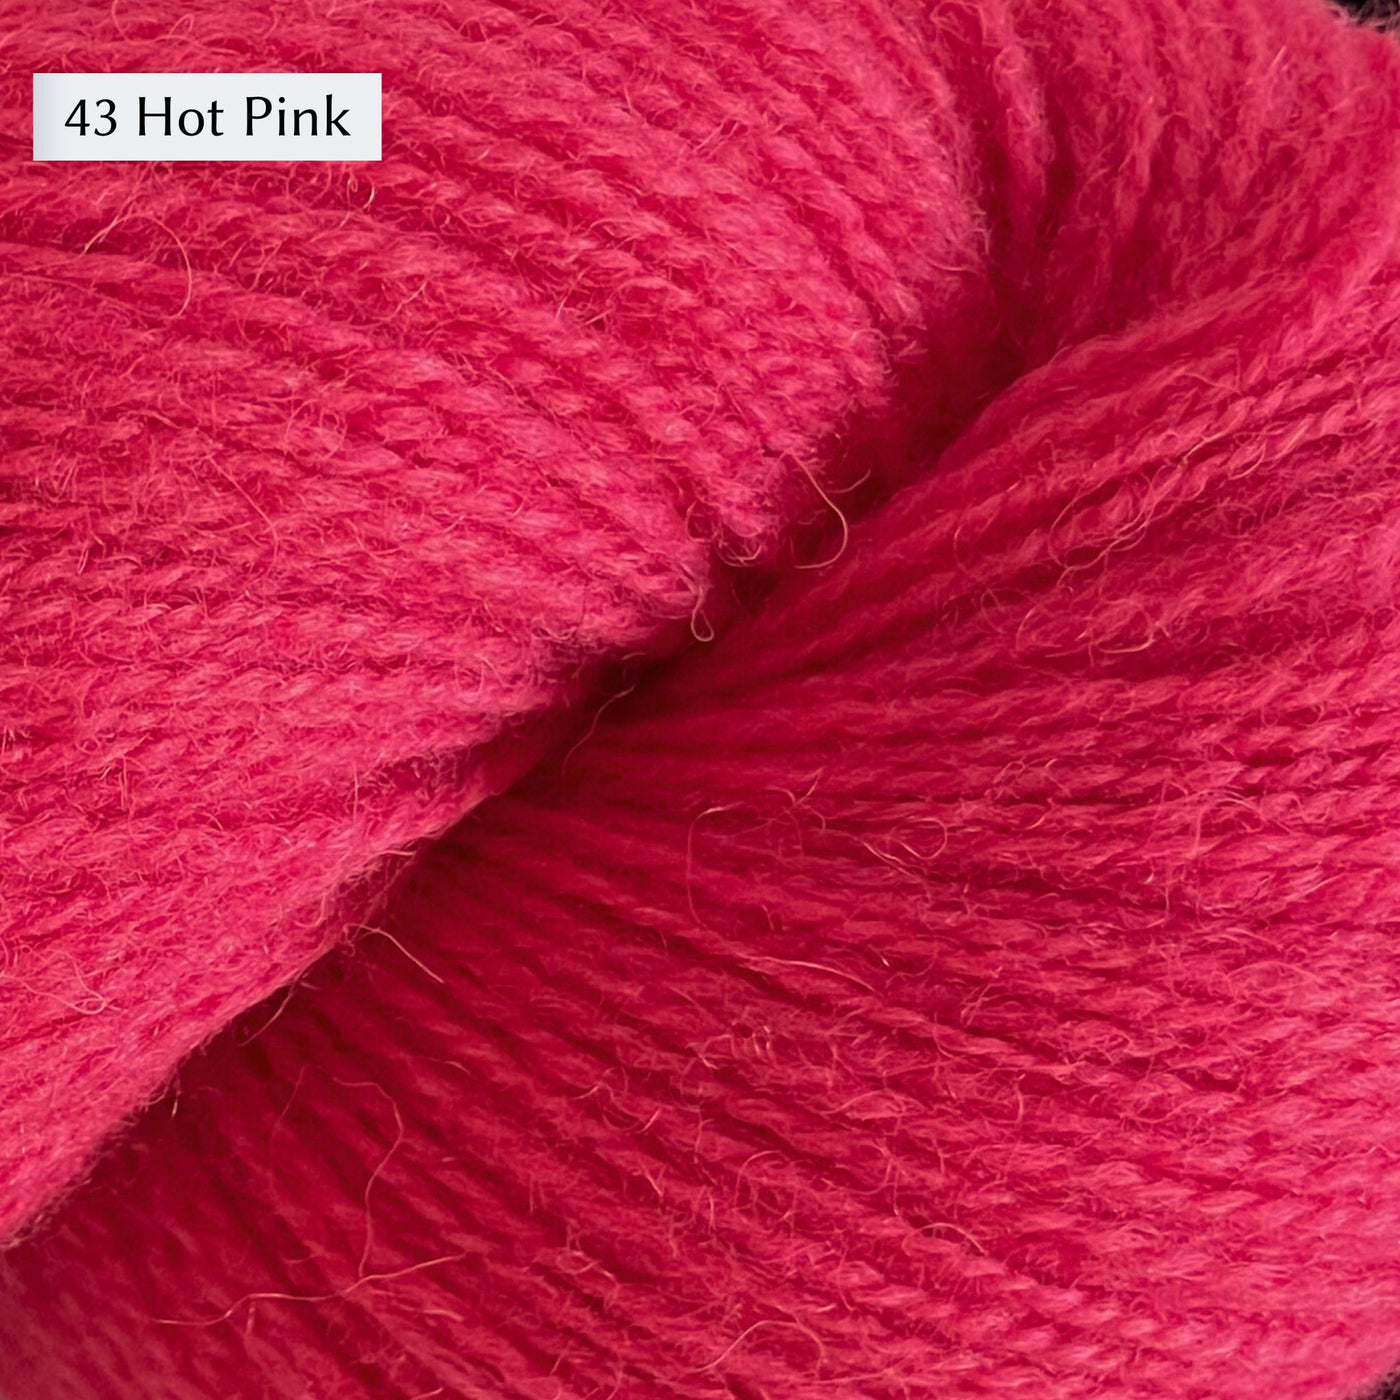 Hot Pink Shepherds Wool Sport Weight Yarn